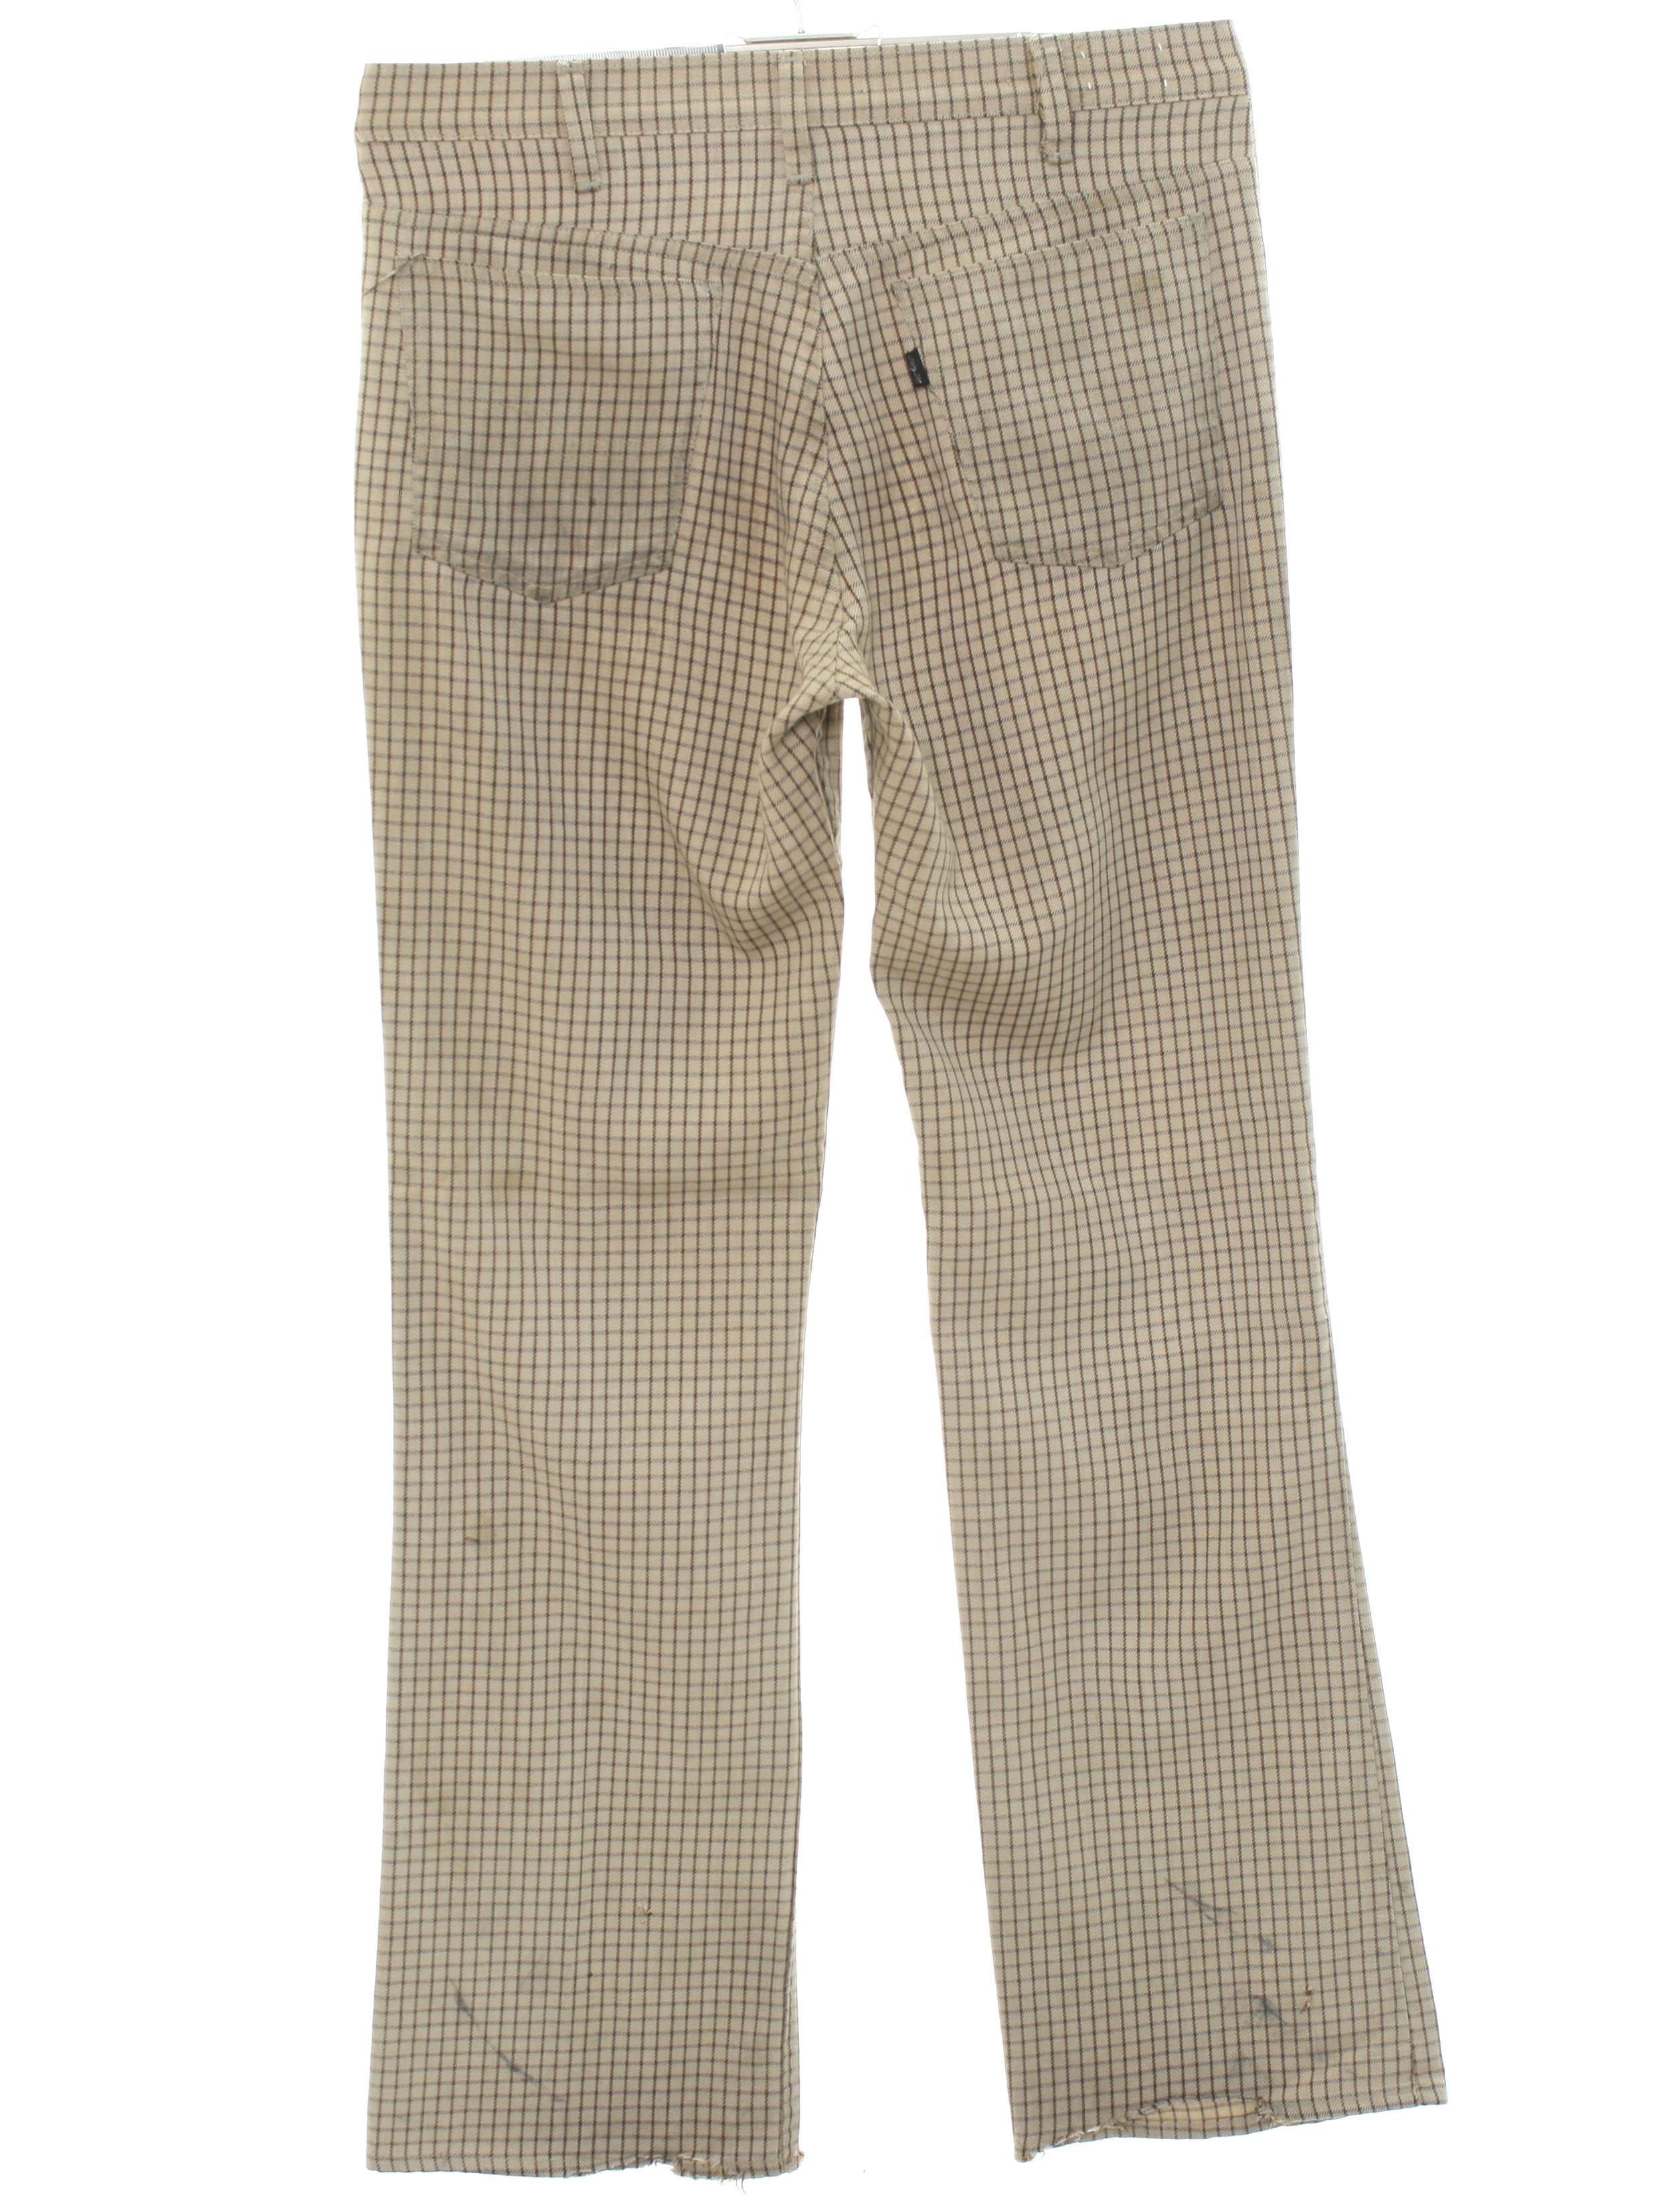 Levis Sta Prest Seventies Vintage Bellbottom Pants: 70s -Levis Sta ...